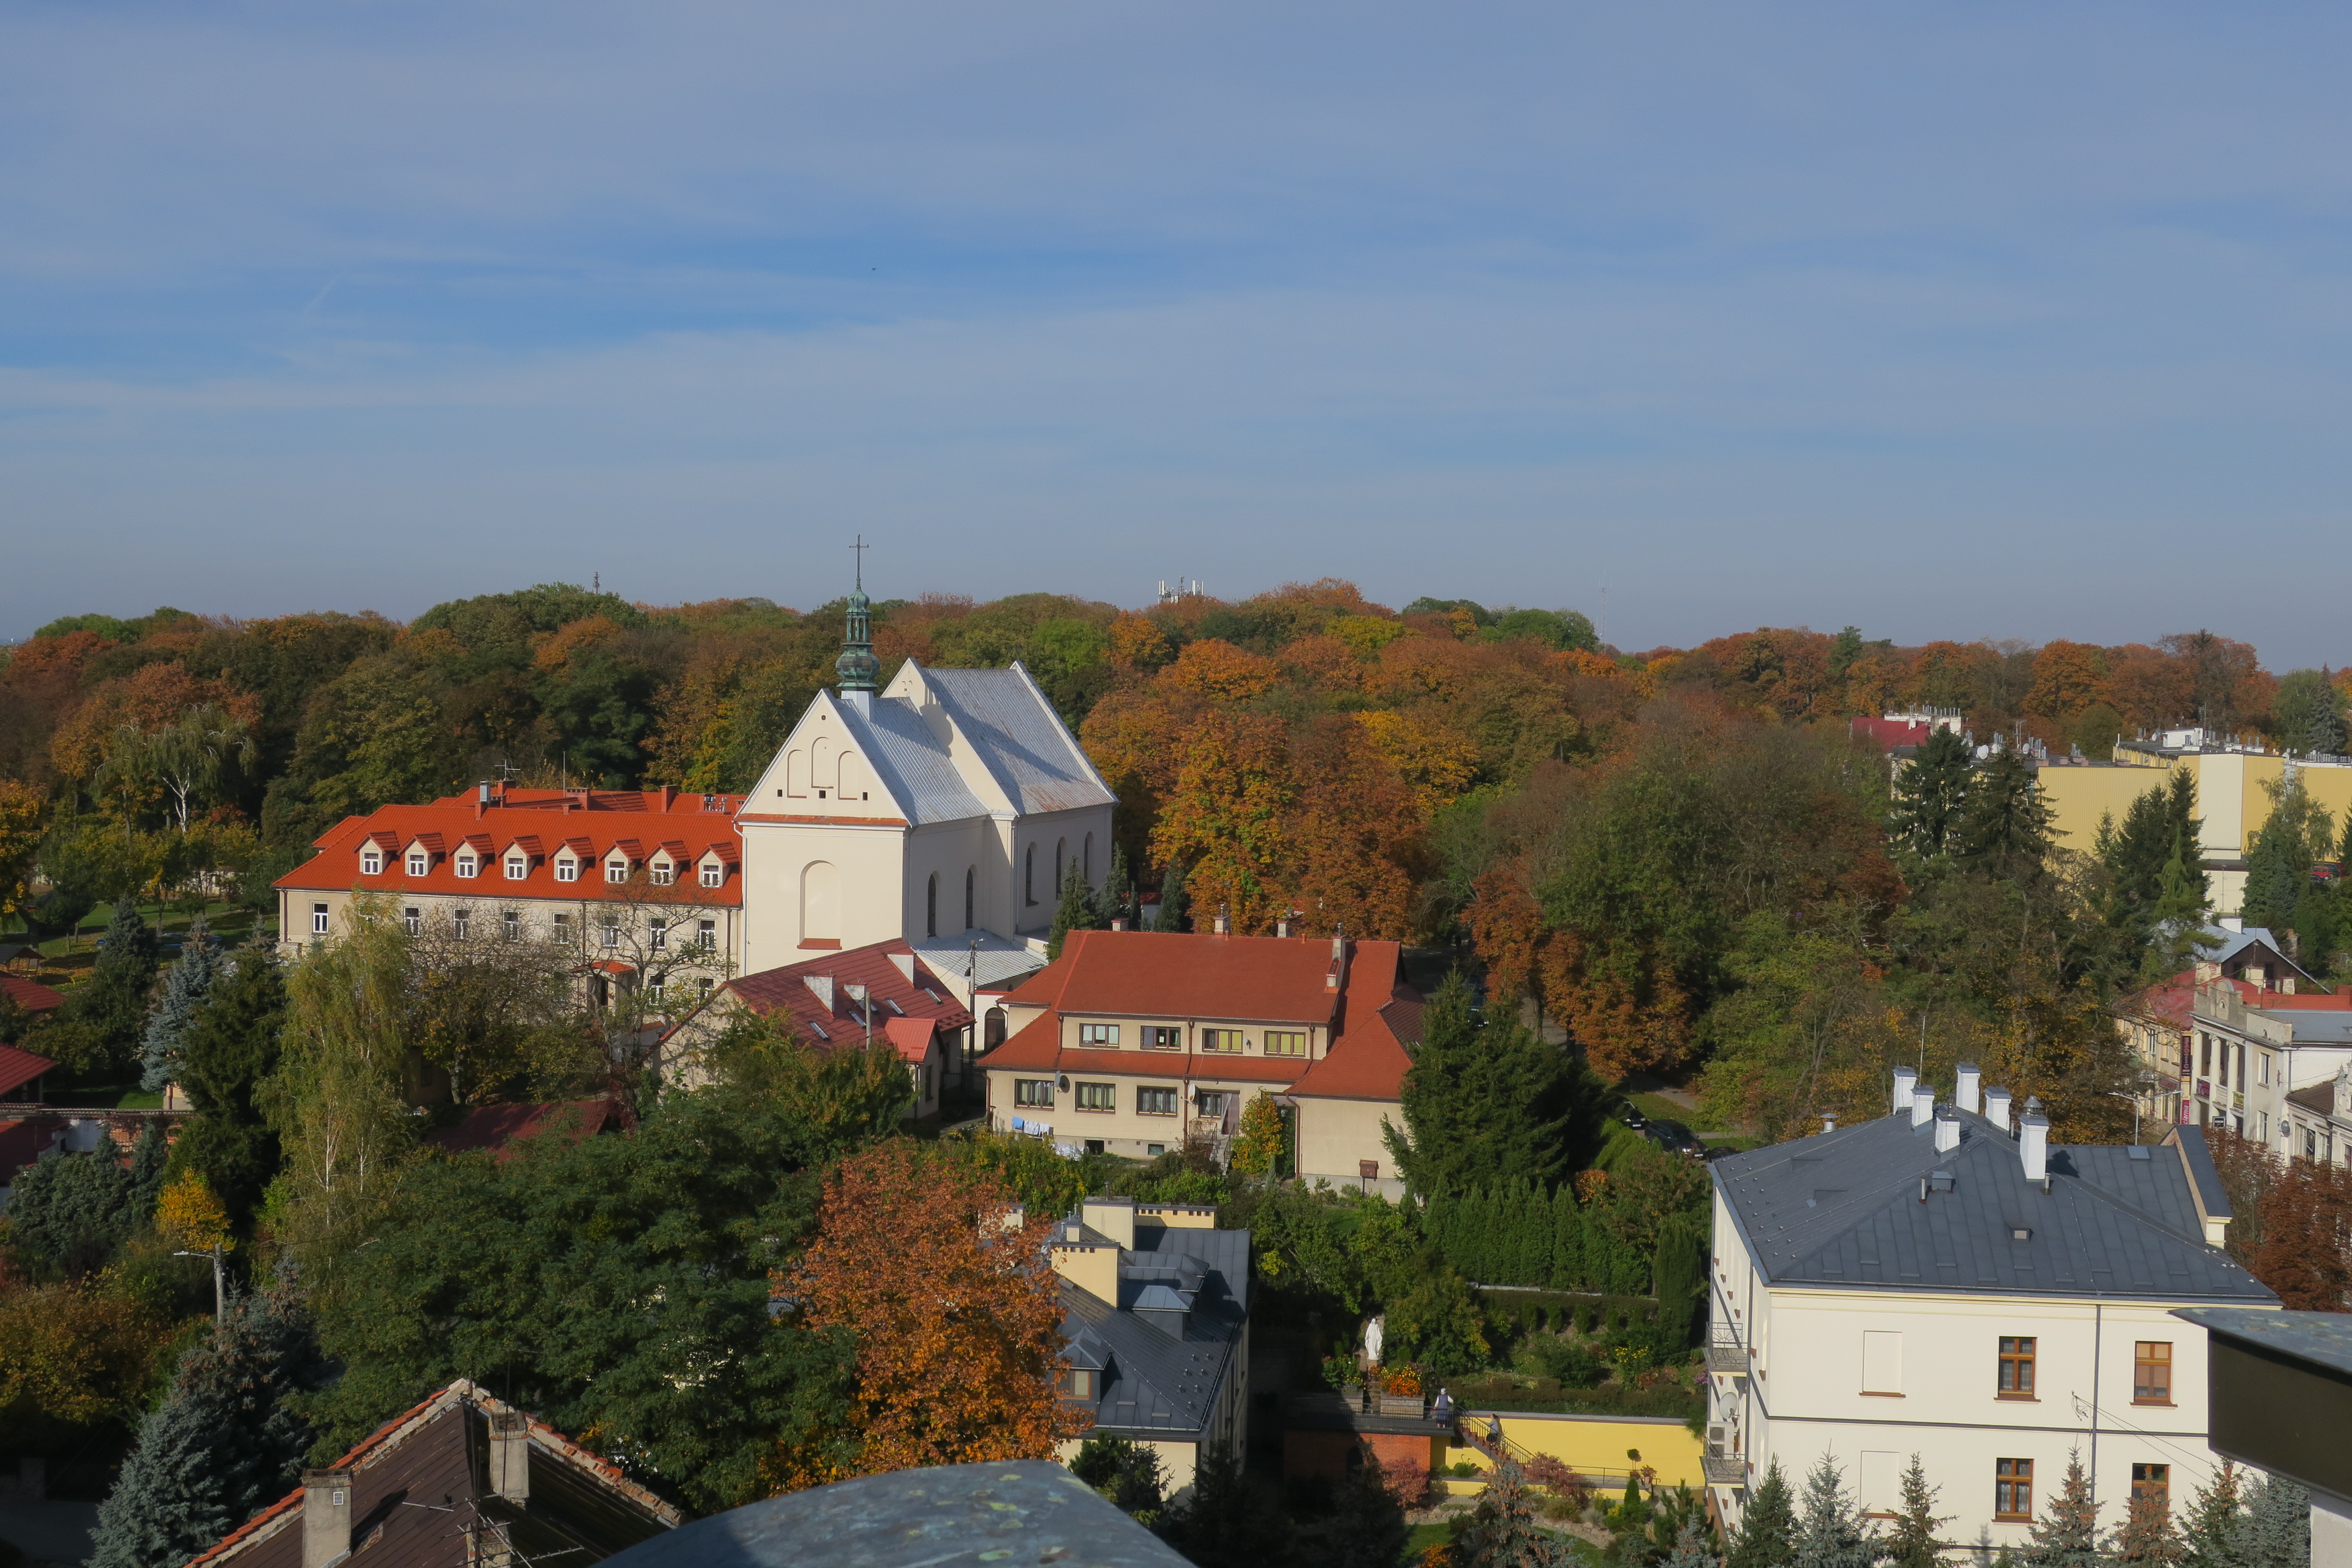 Panorama Sandomierza